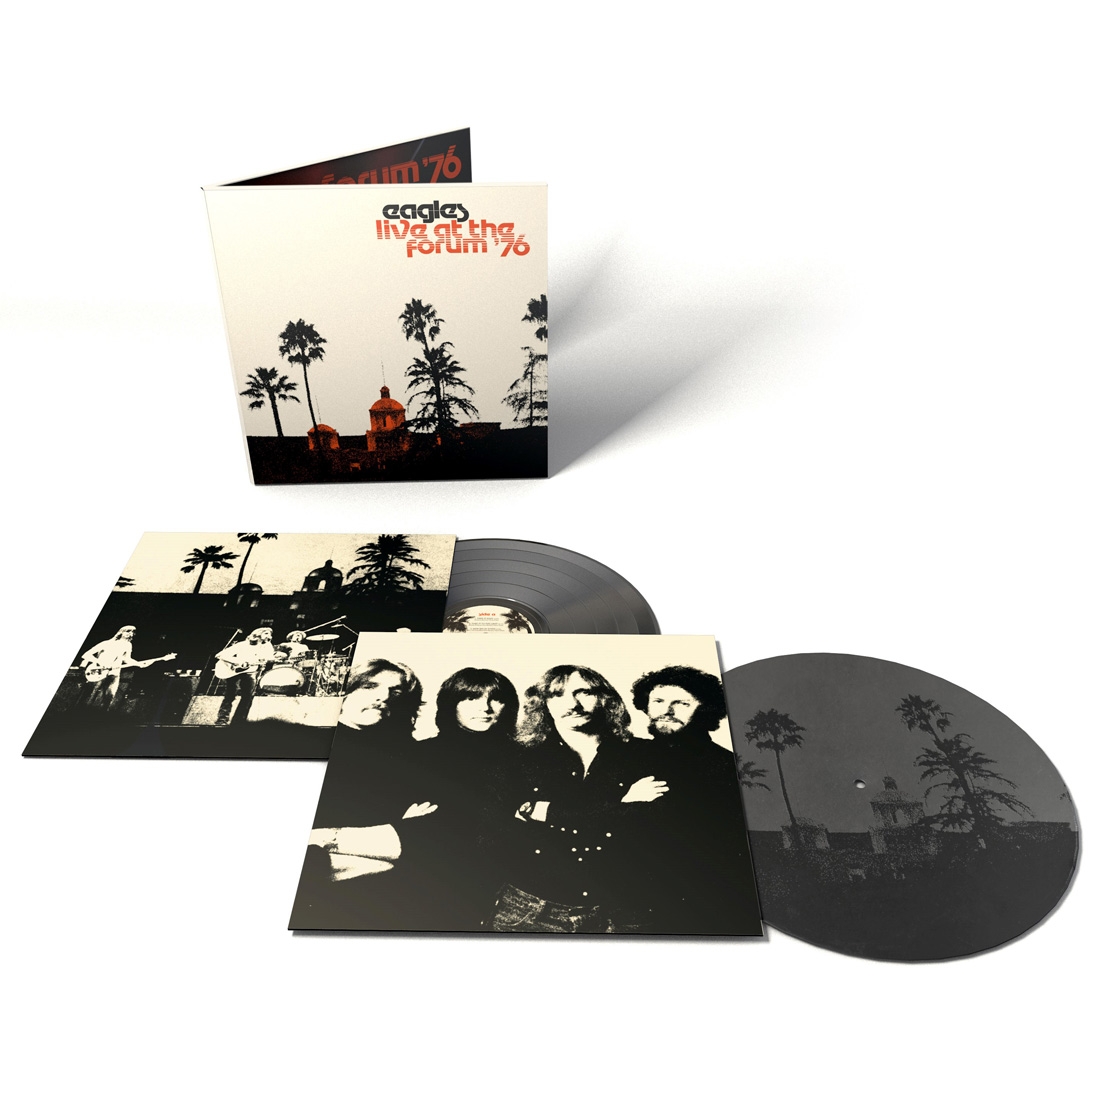 Eagles - Live From The Forum MMXVIII LP レコード 輸入盤 50%割引 | mottaviegas.com.br